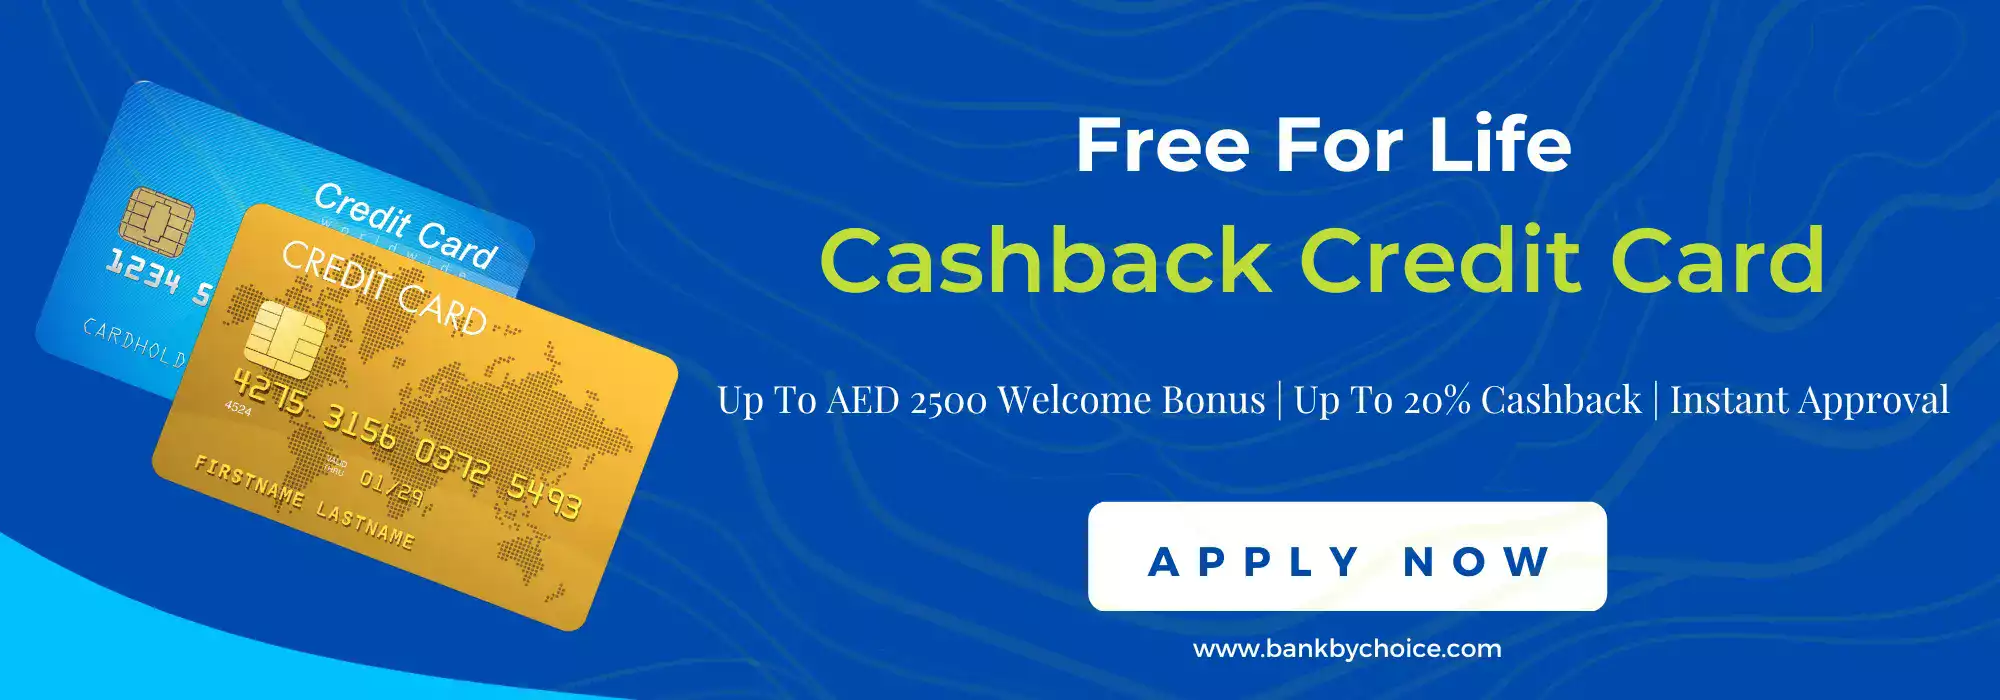 cashback credit cards in UAE- Bankbychoice